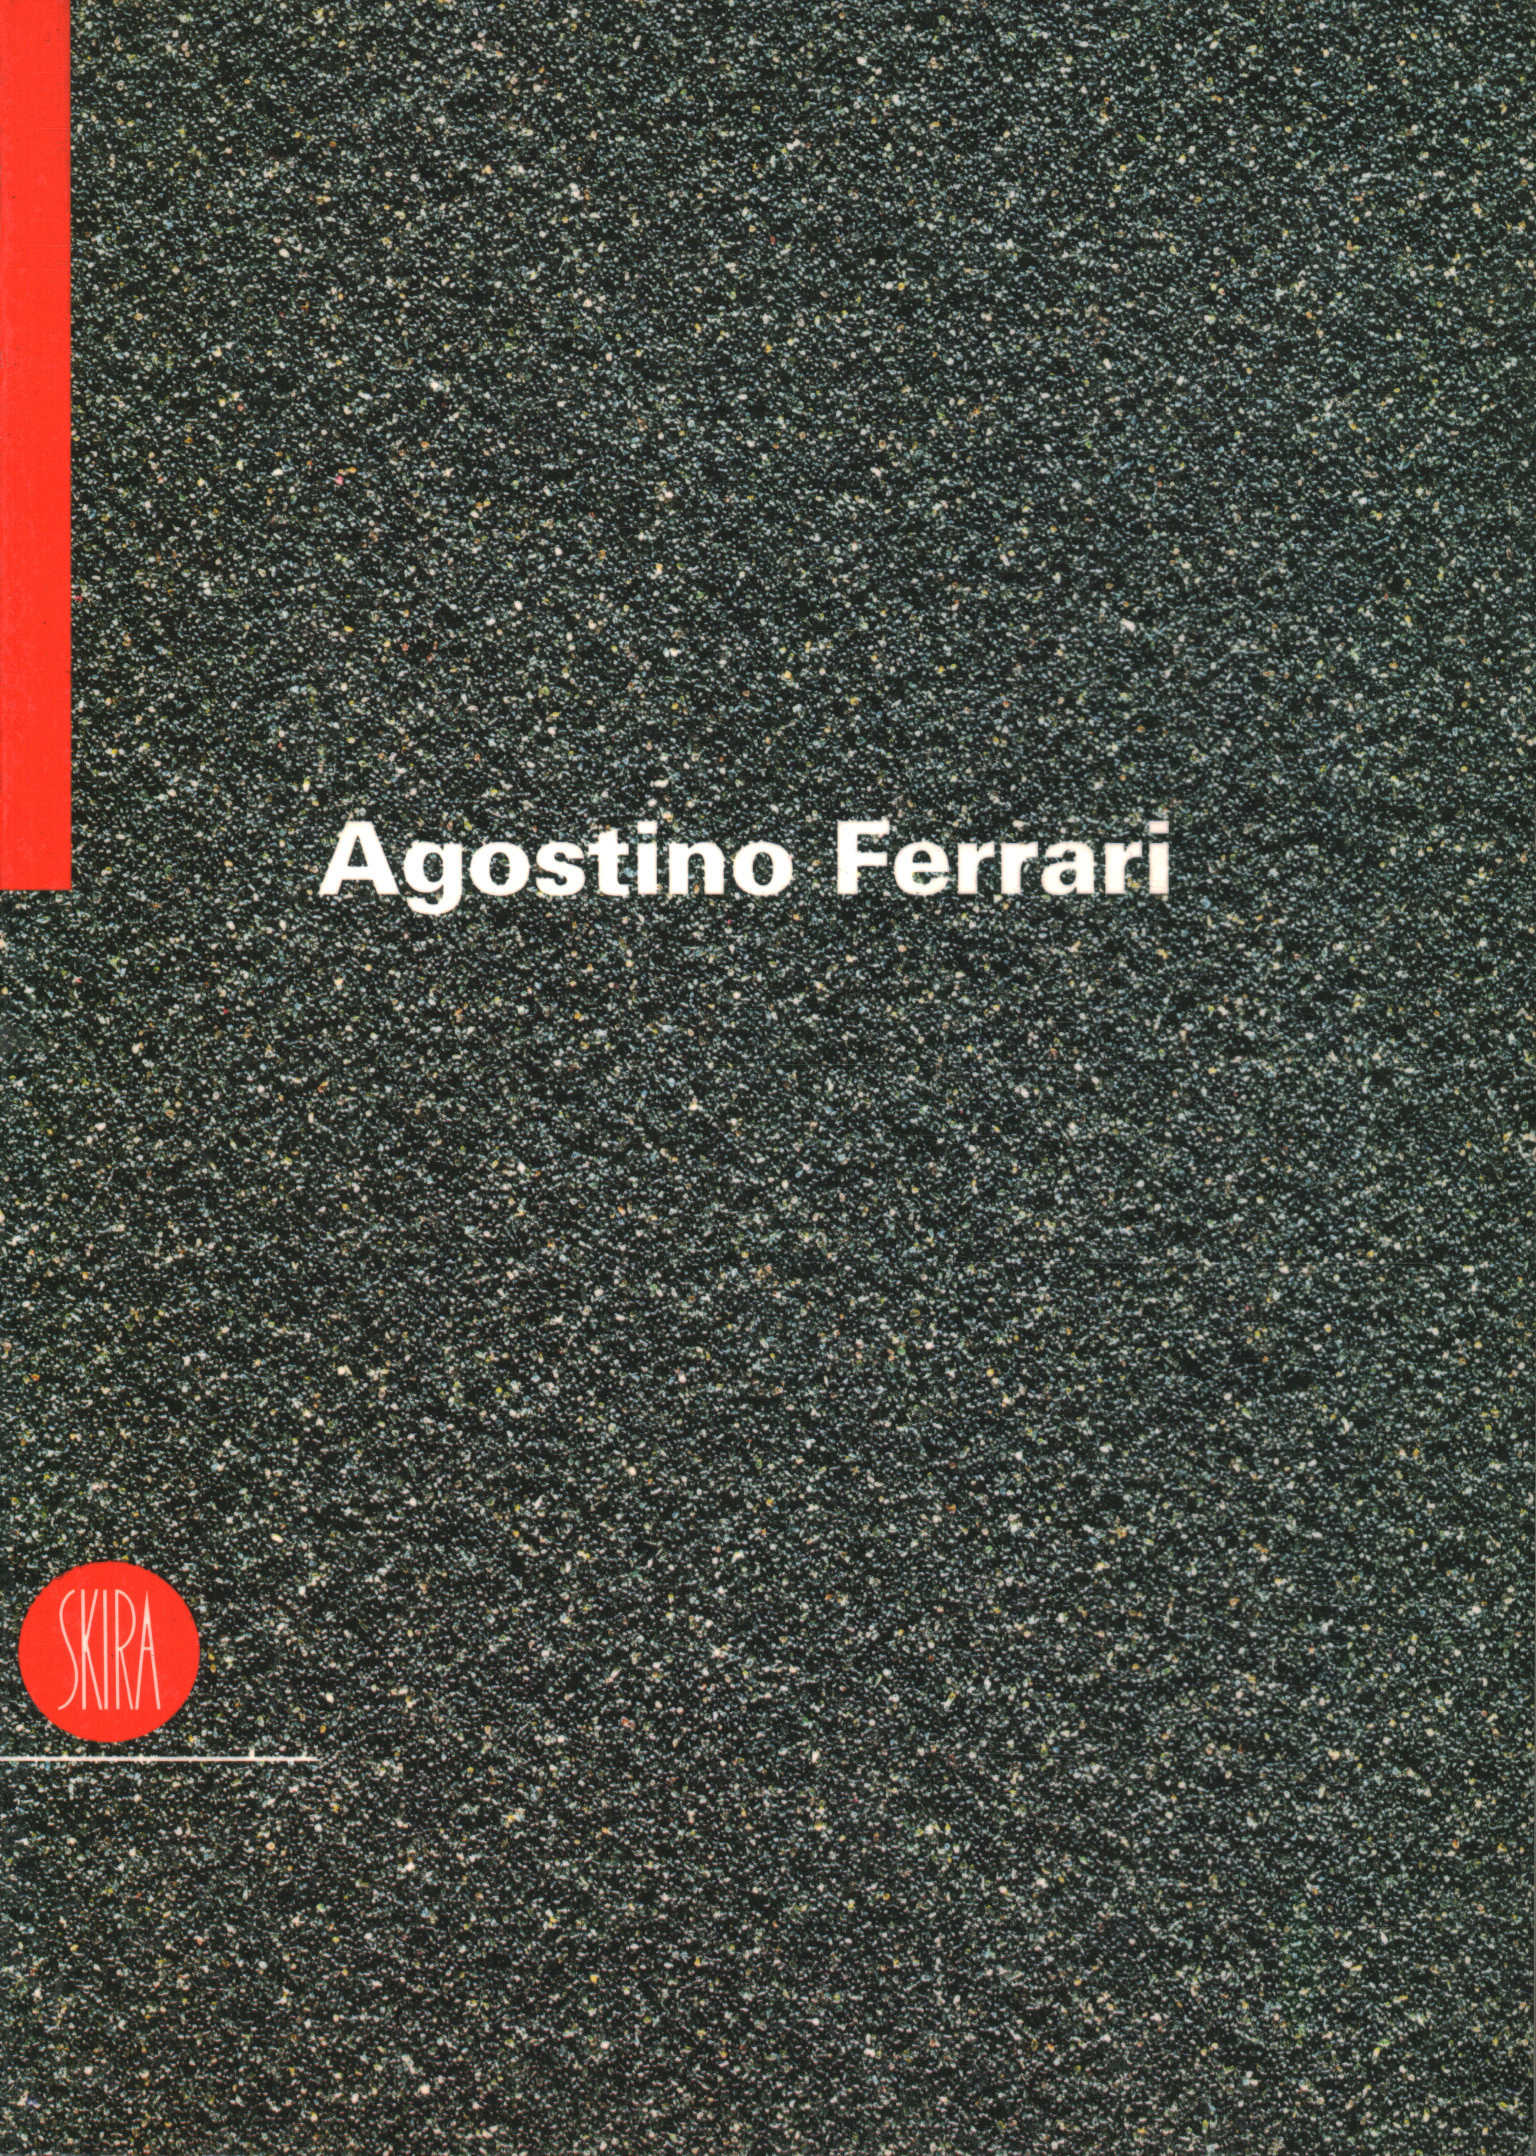 Agostino Ferrari. Frammenti